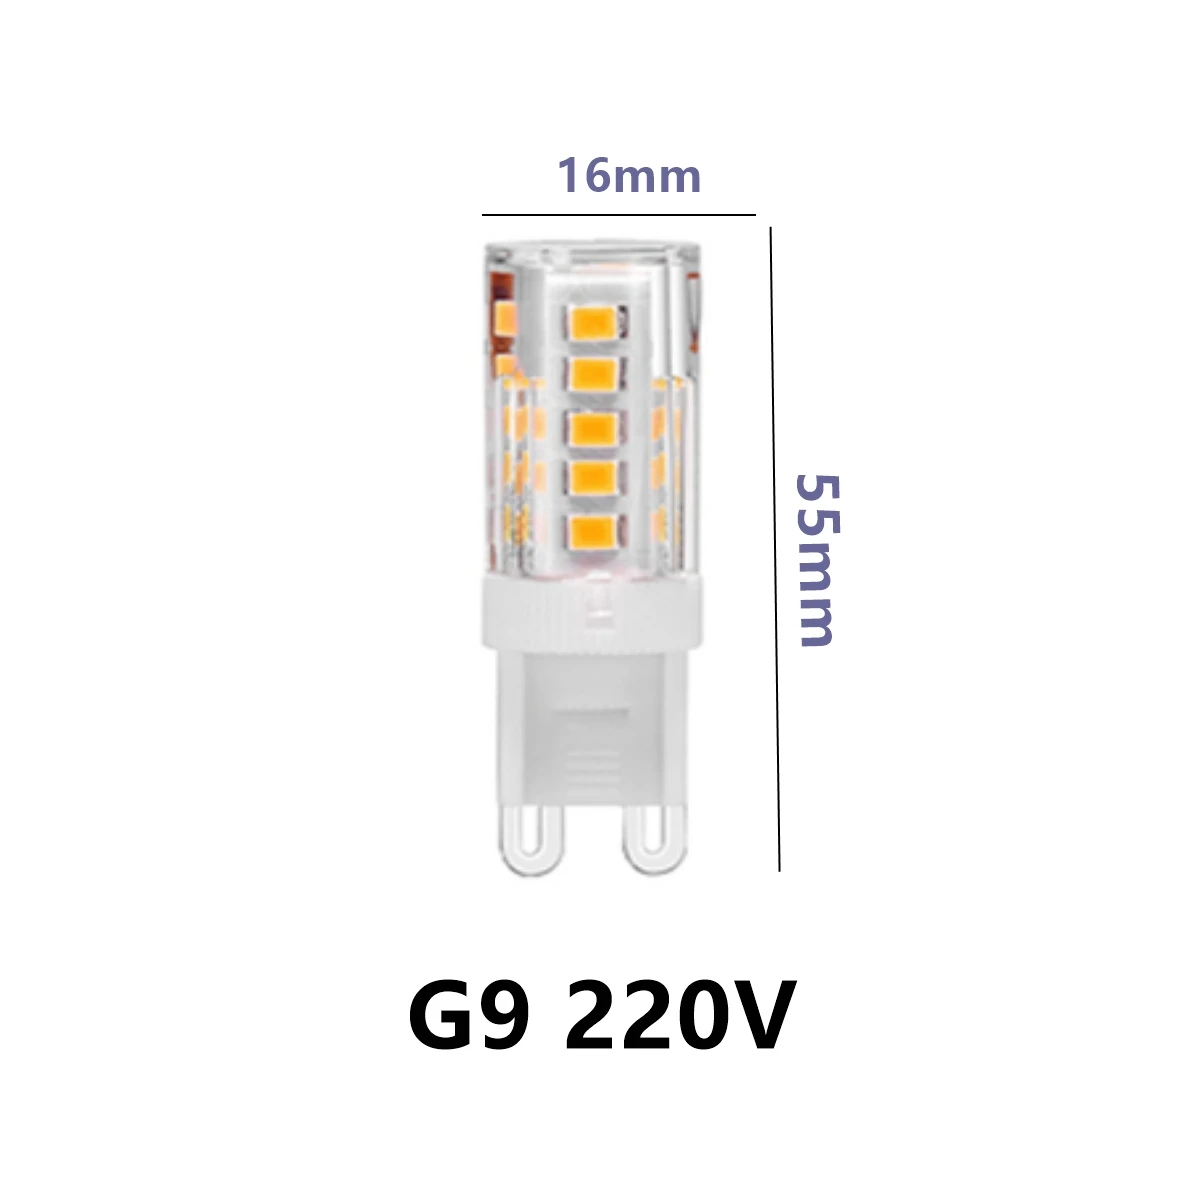 New product LED Mini G9 Corn Light AC220V 3W super bright non-strobe warm white light can replace 20W 50W halogen lamp